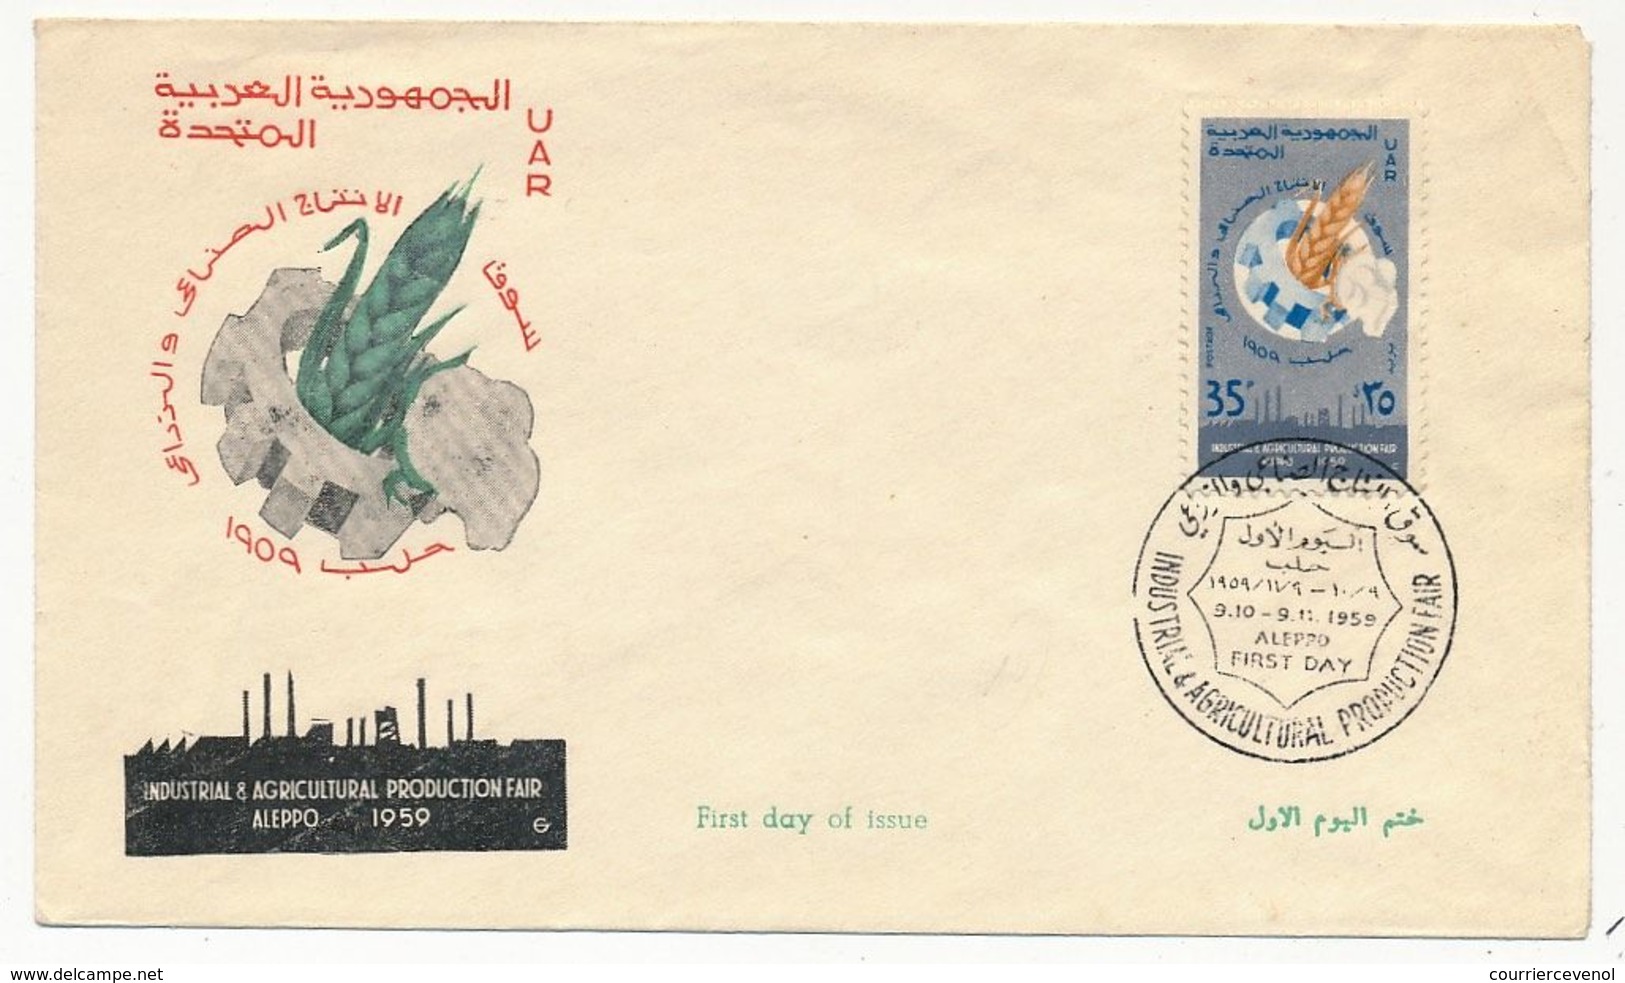 EGYPTE UAR - FDC - Industrial & Agricultural Fair 1959 - Le Caire - 9/11/1959 - Briefe U. Dokumente